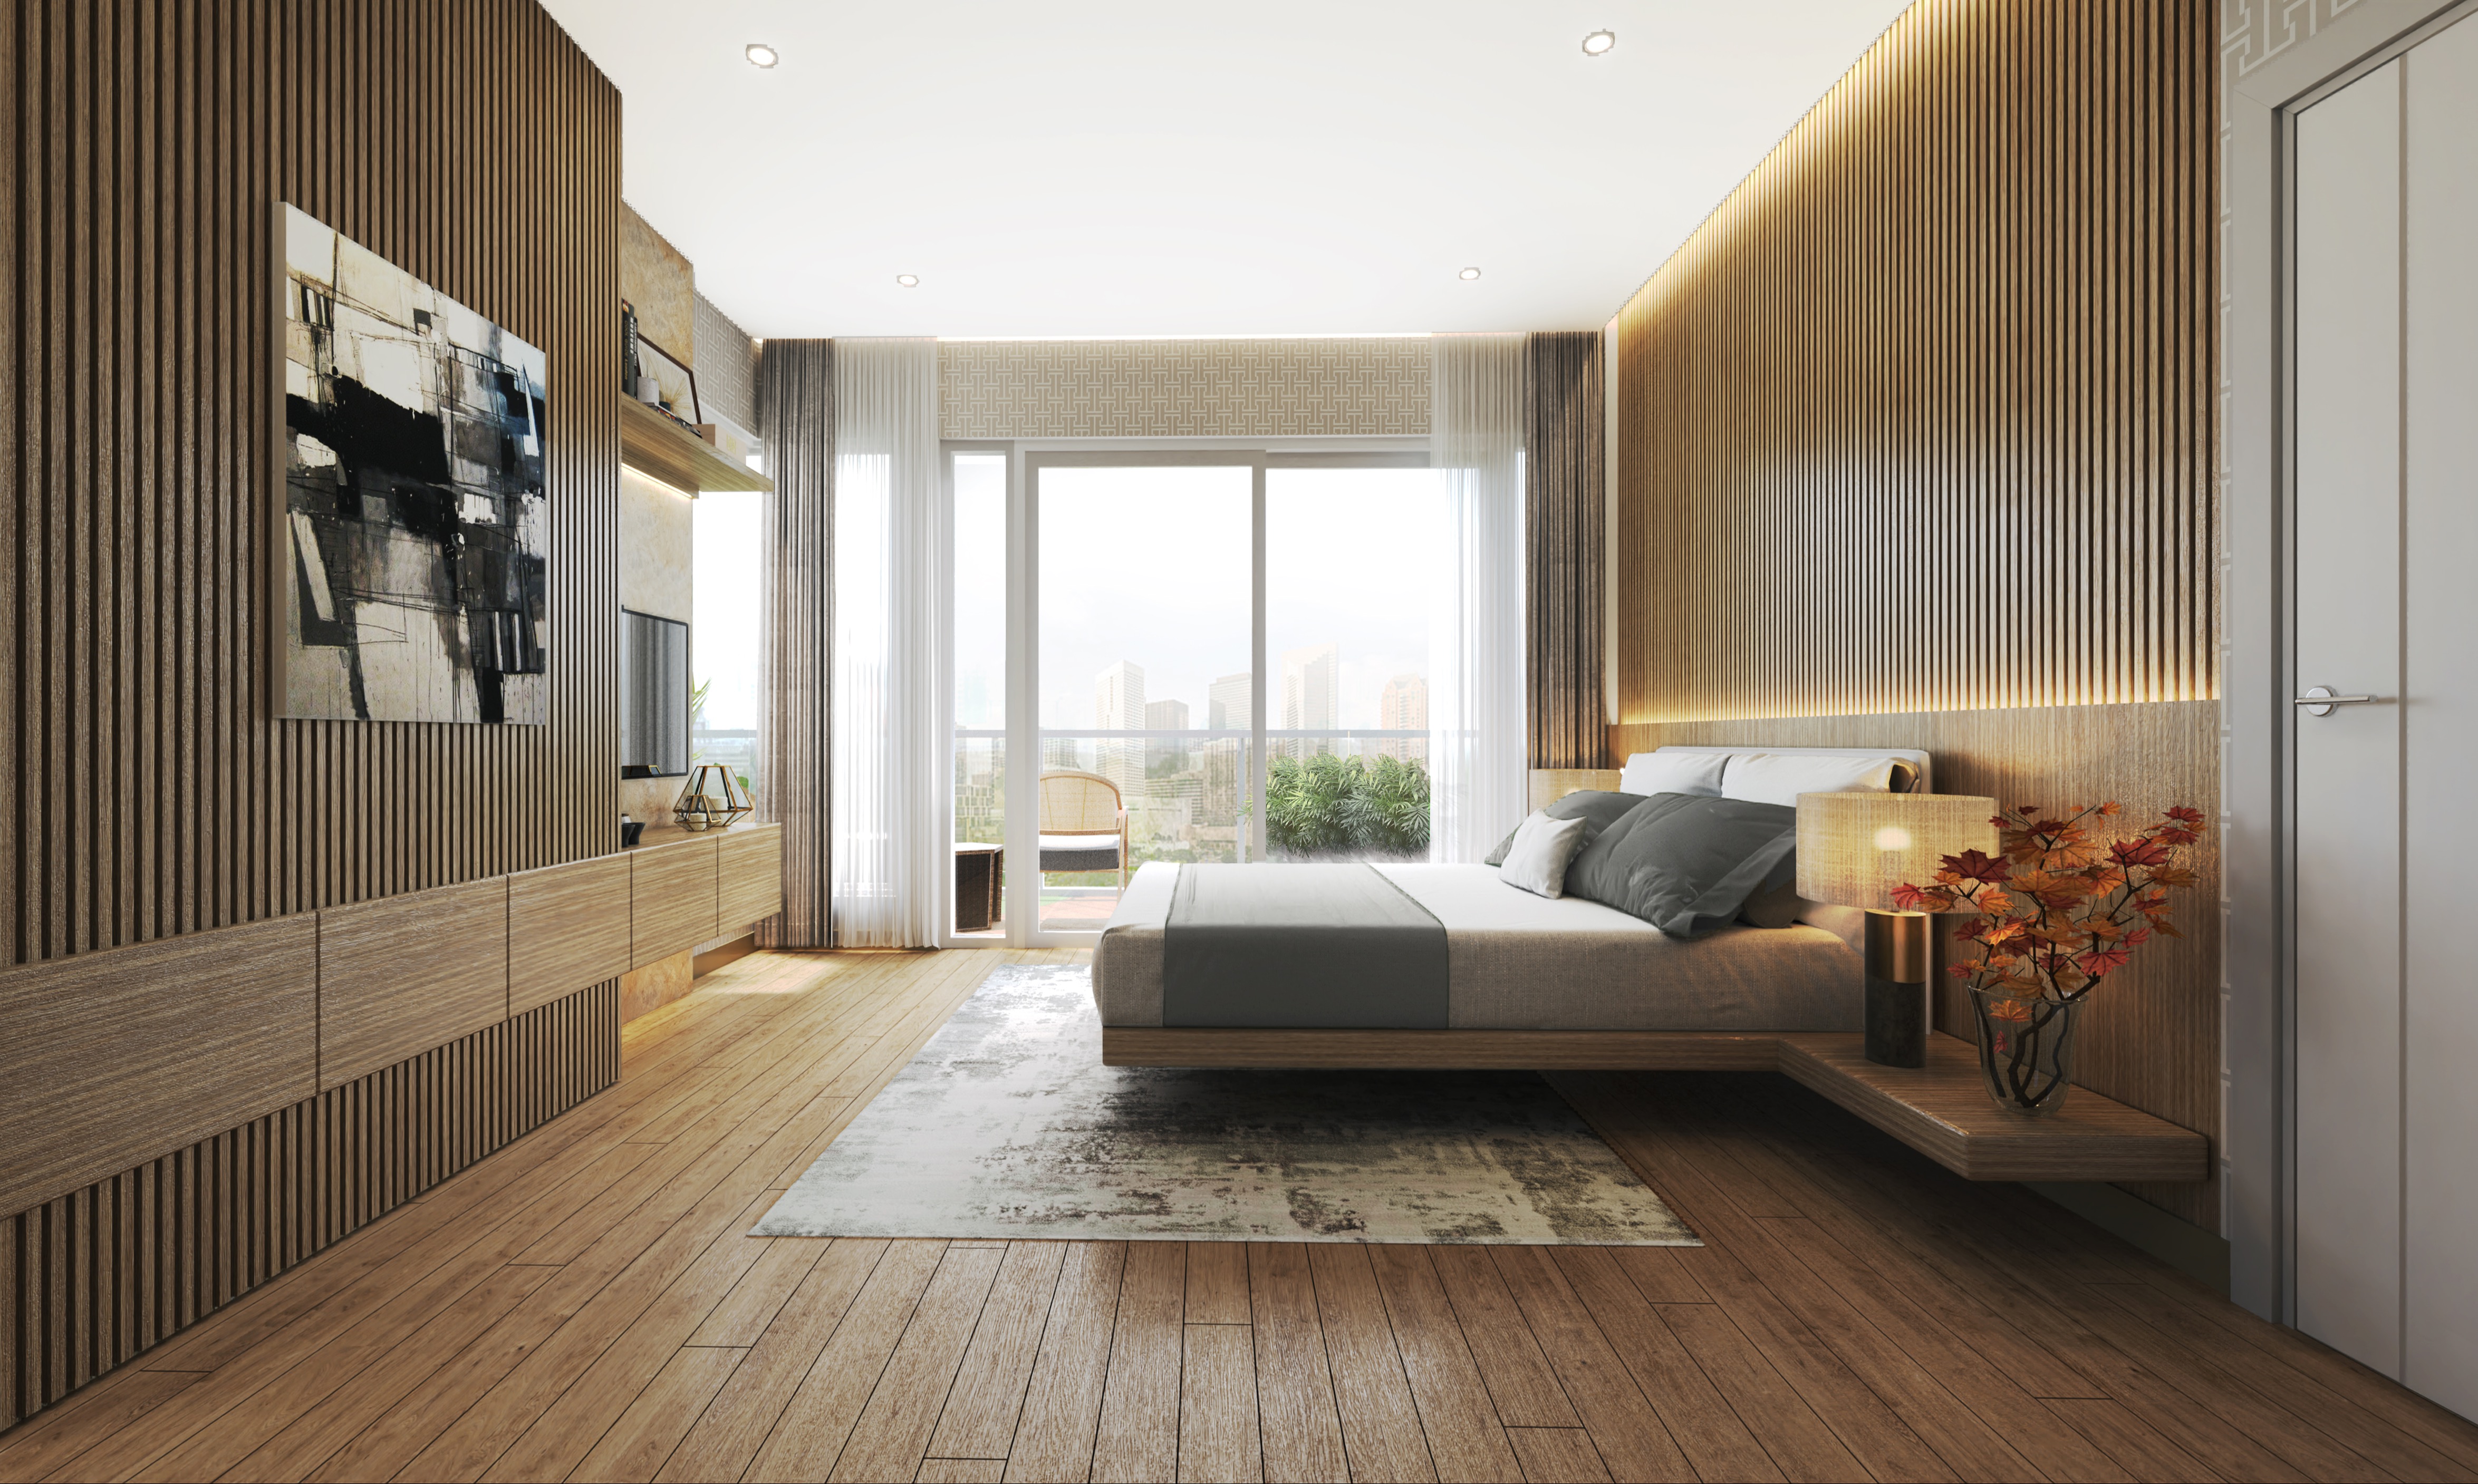 Digital render of a modern bedroom with multiple displays